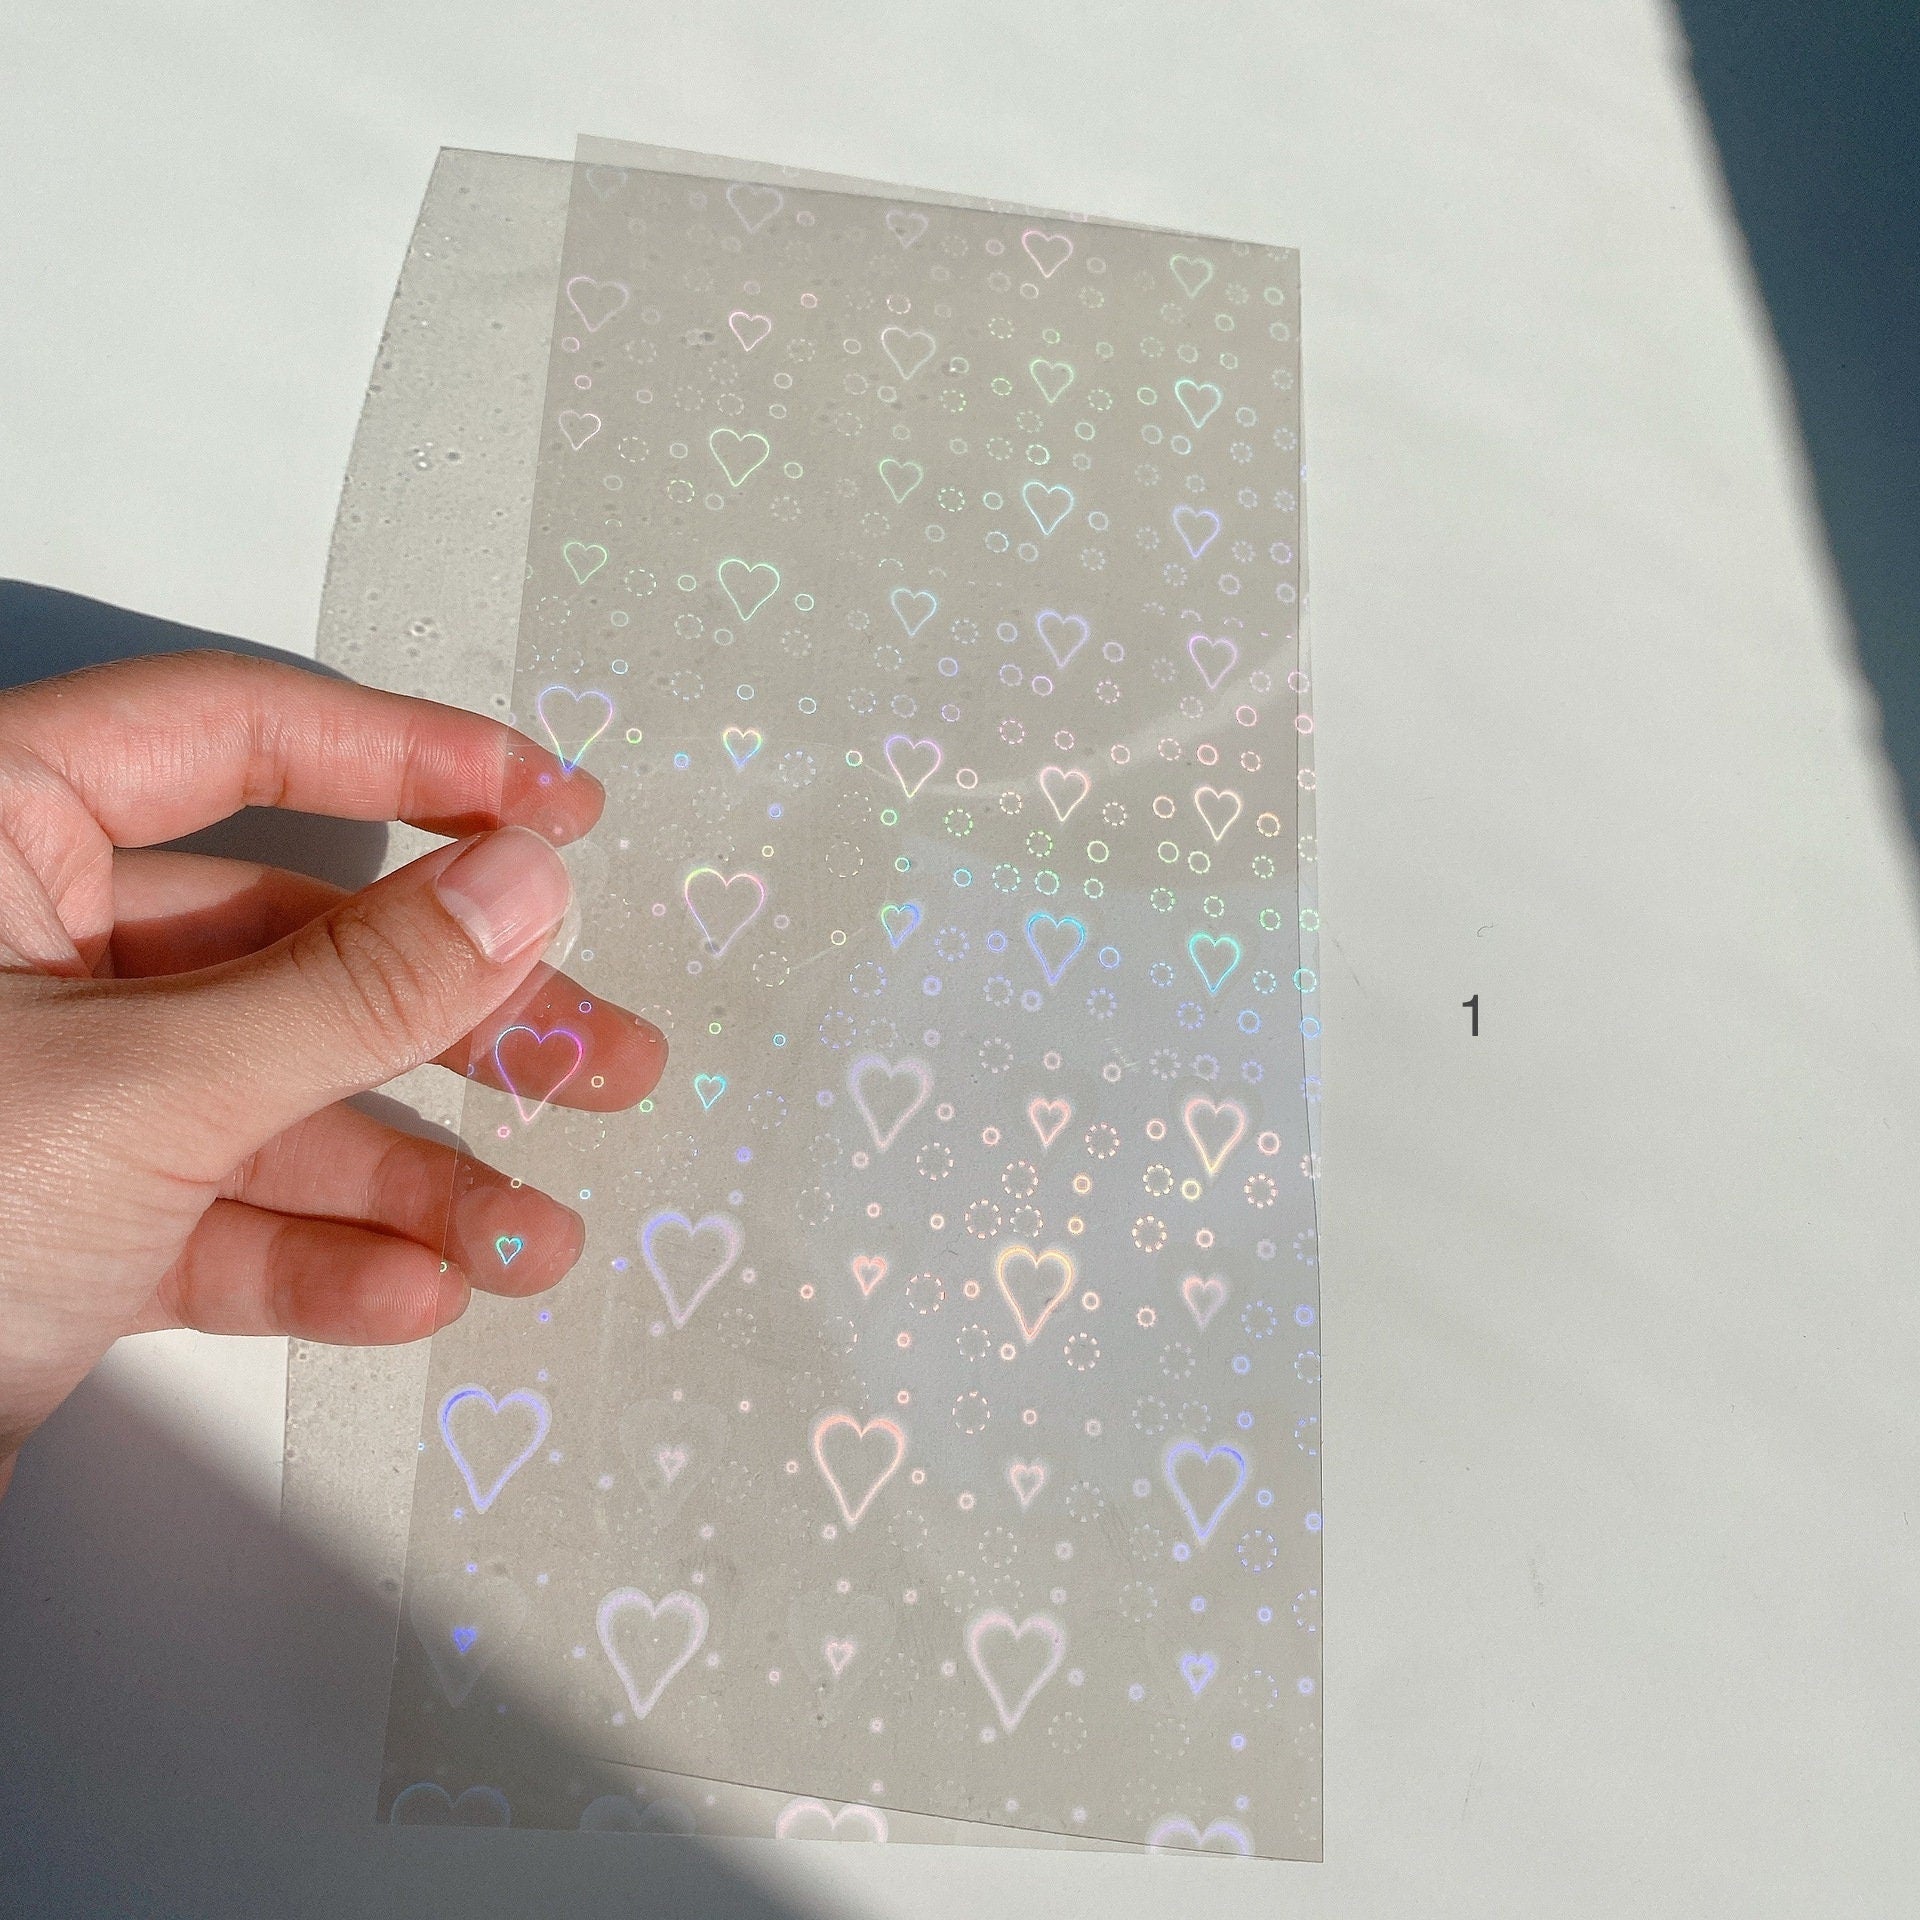 Hologram Overlay Sheet, clear self adhesive laminate sheet